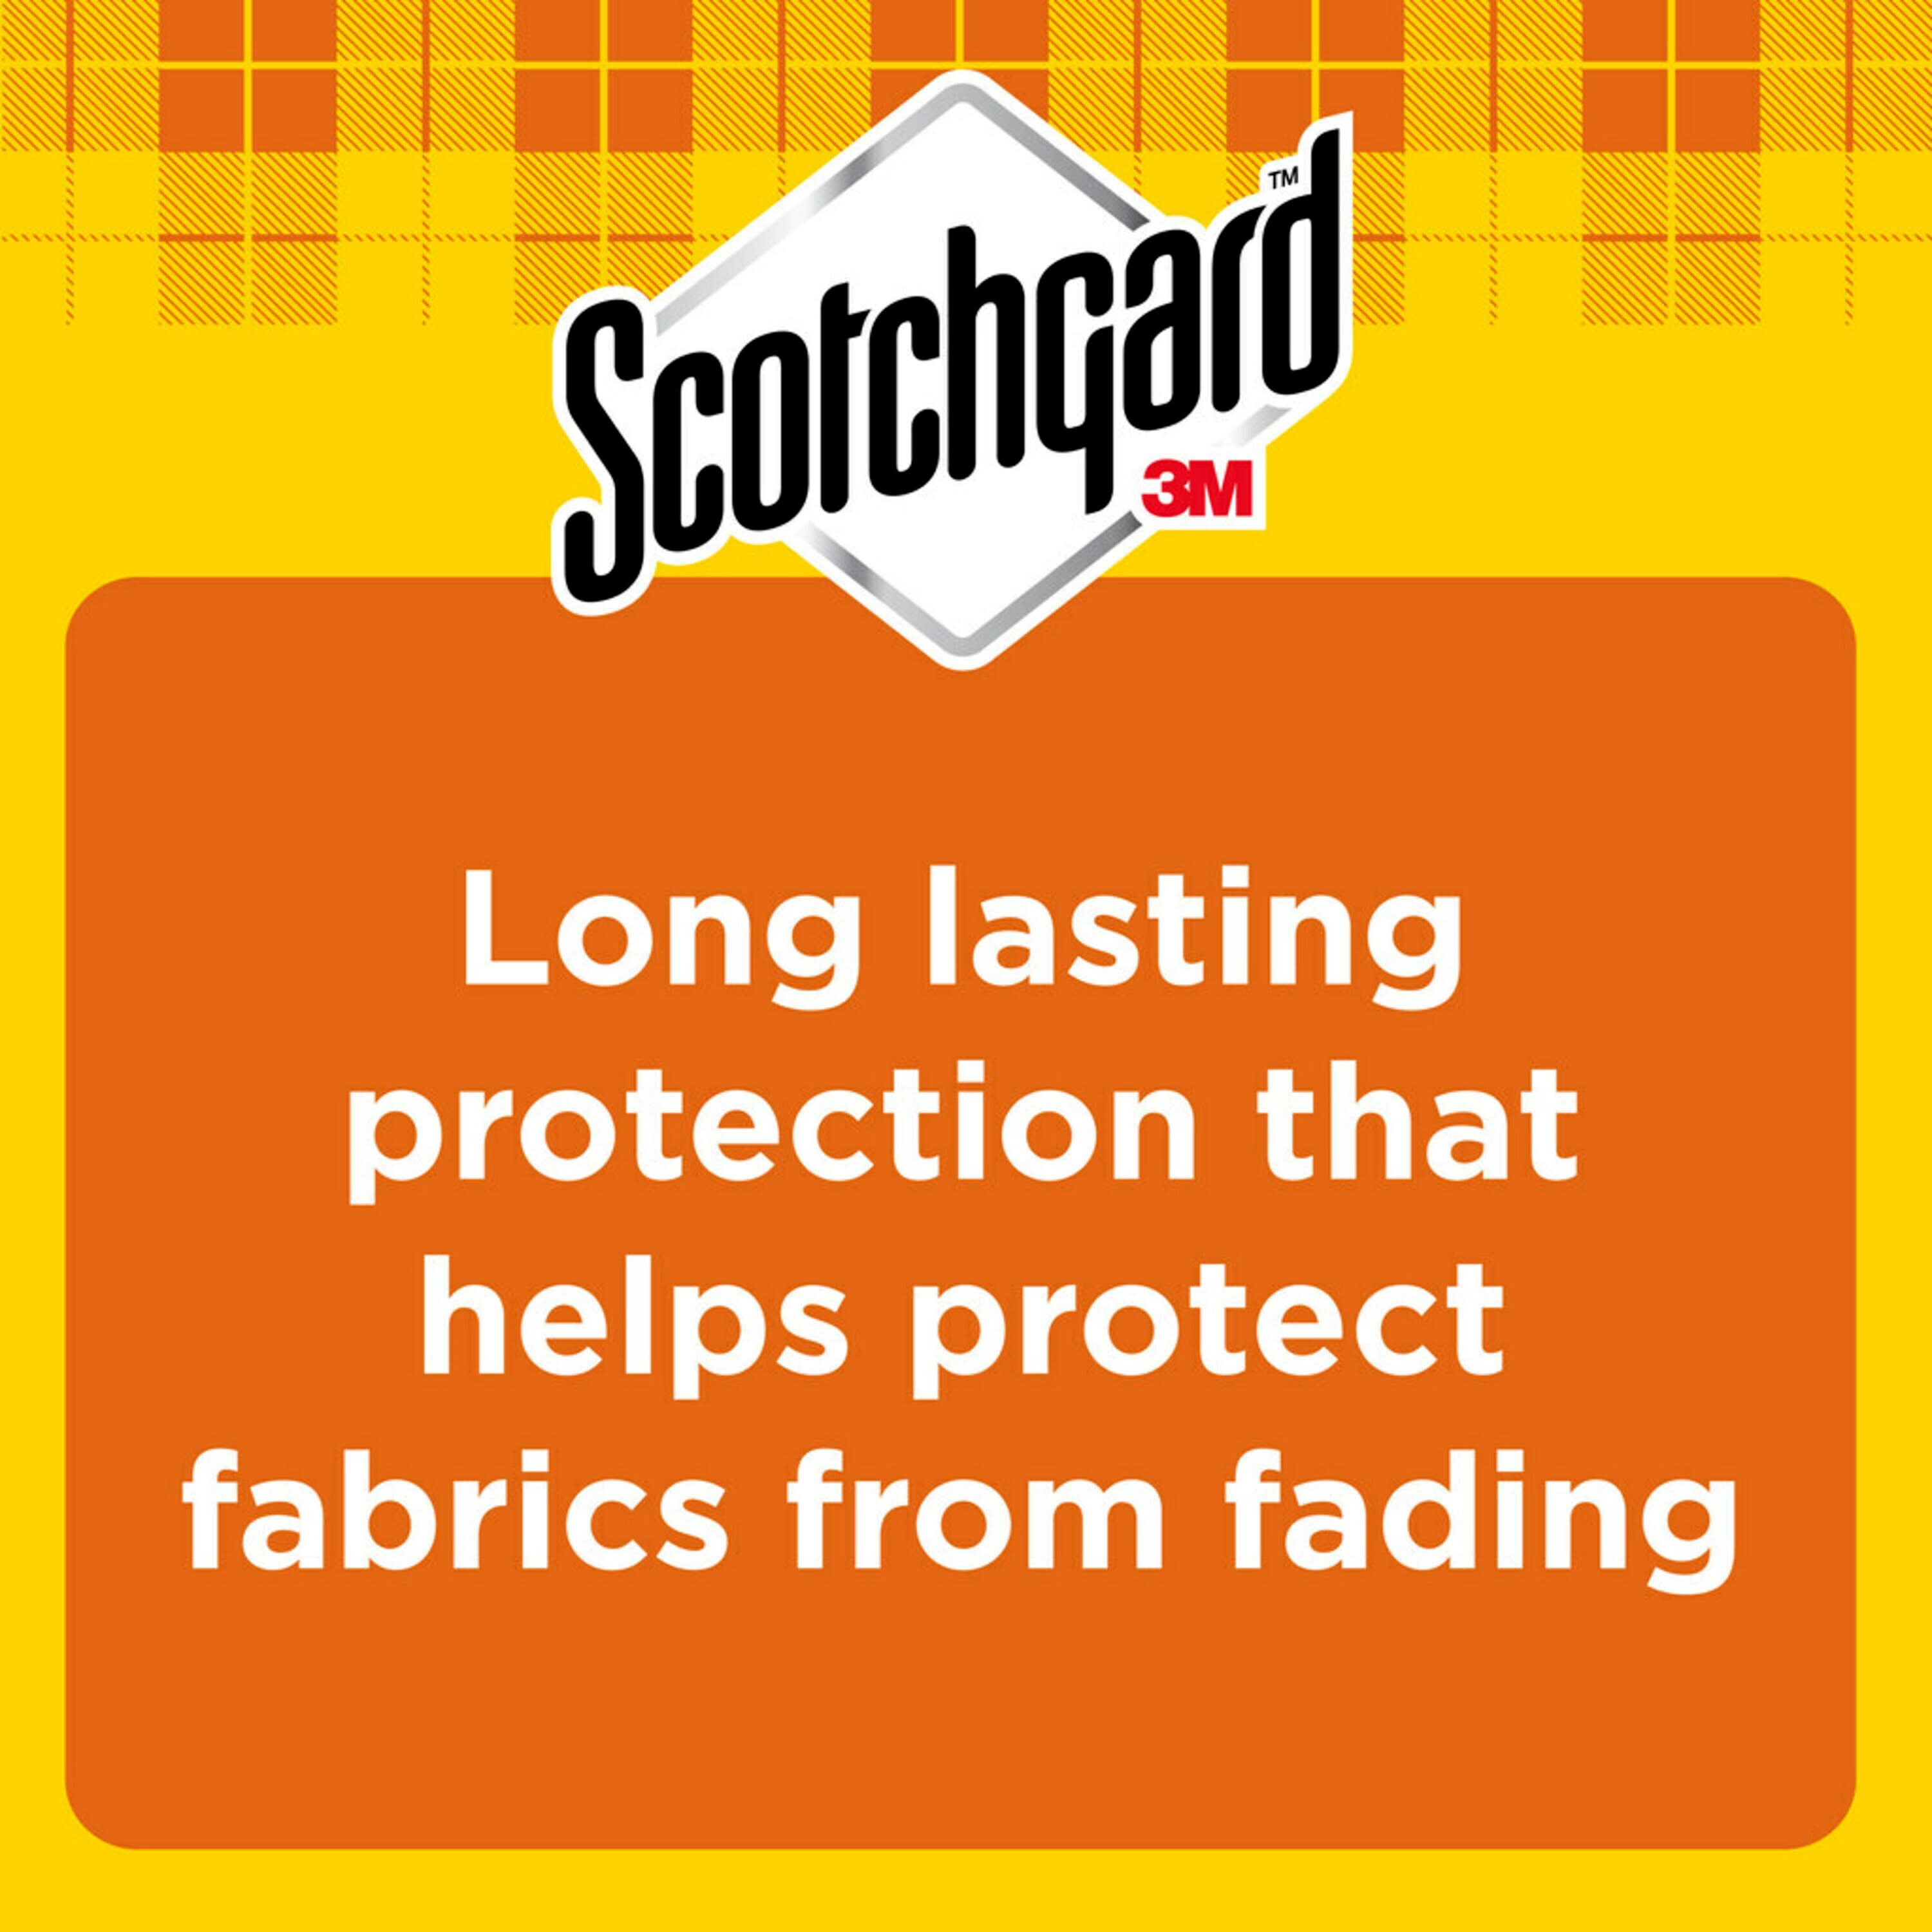 SCOTCHGARD Fabric Upholstery Clothing Leather Furniture Water Shield Spray  Protector Aerosol Waterproof Waterproofing 4106-10 PF 